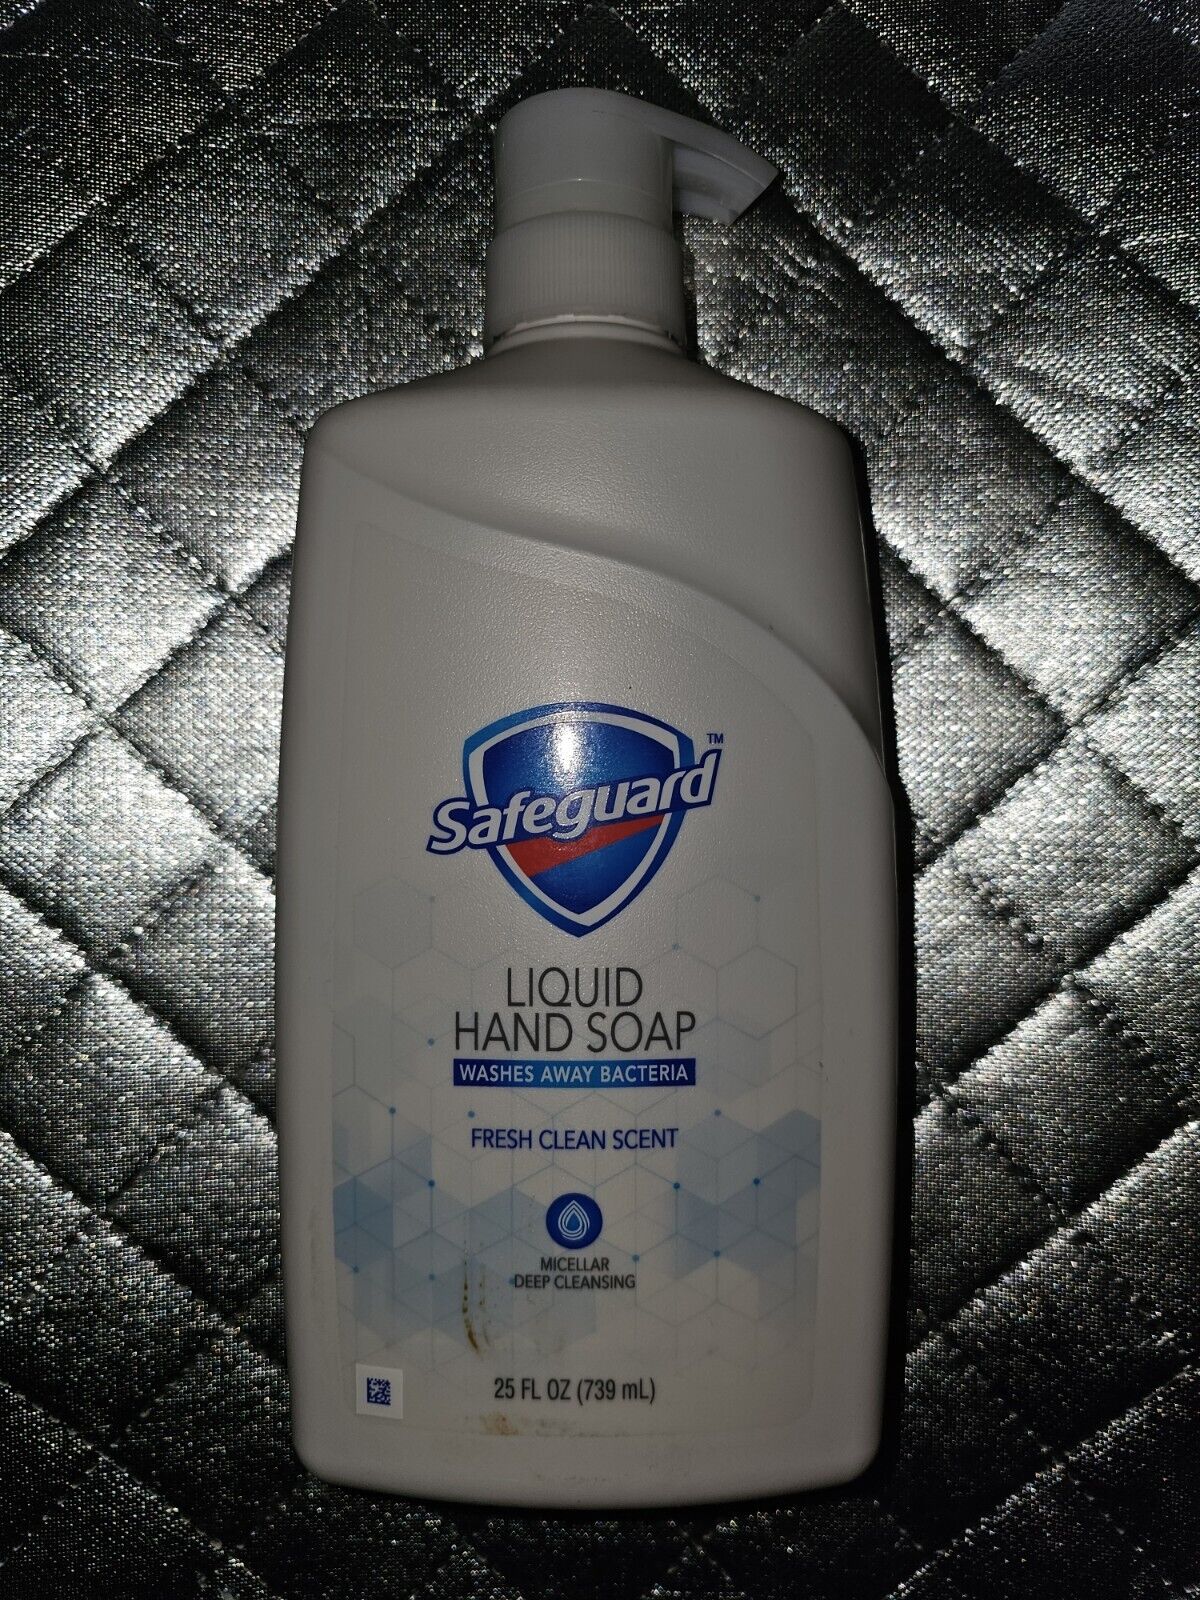 Safeguard Liquid Hand Soap Micellar Deep Cleansing Clean Scent 25 oz JUMBO 